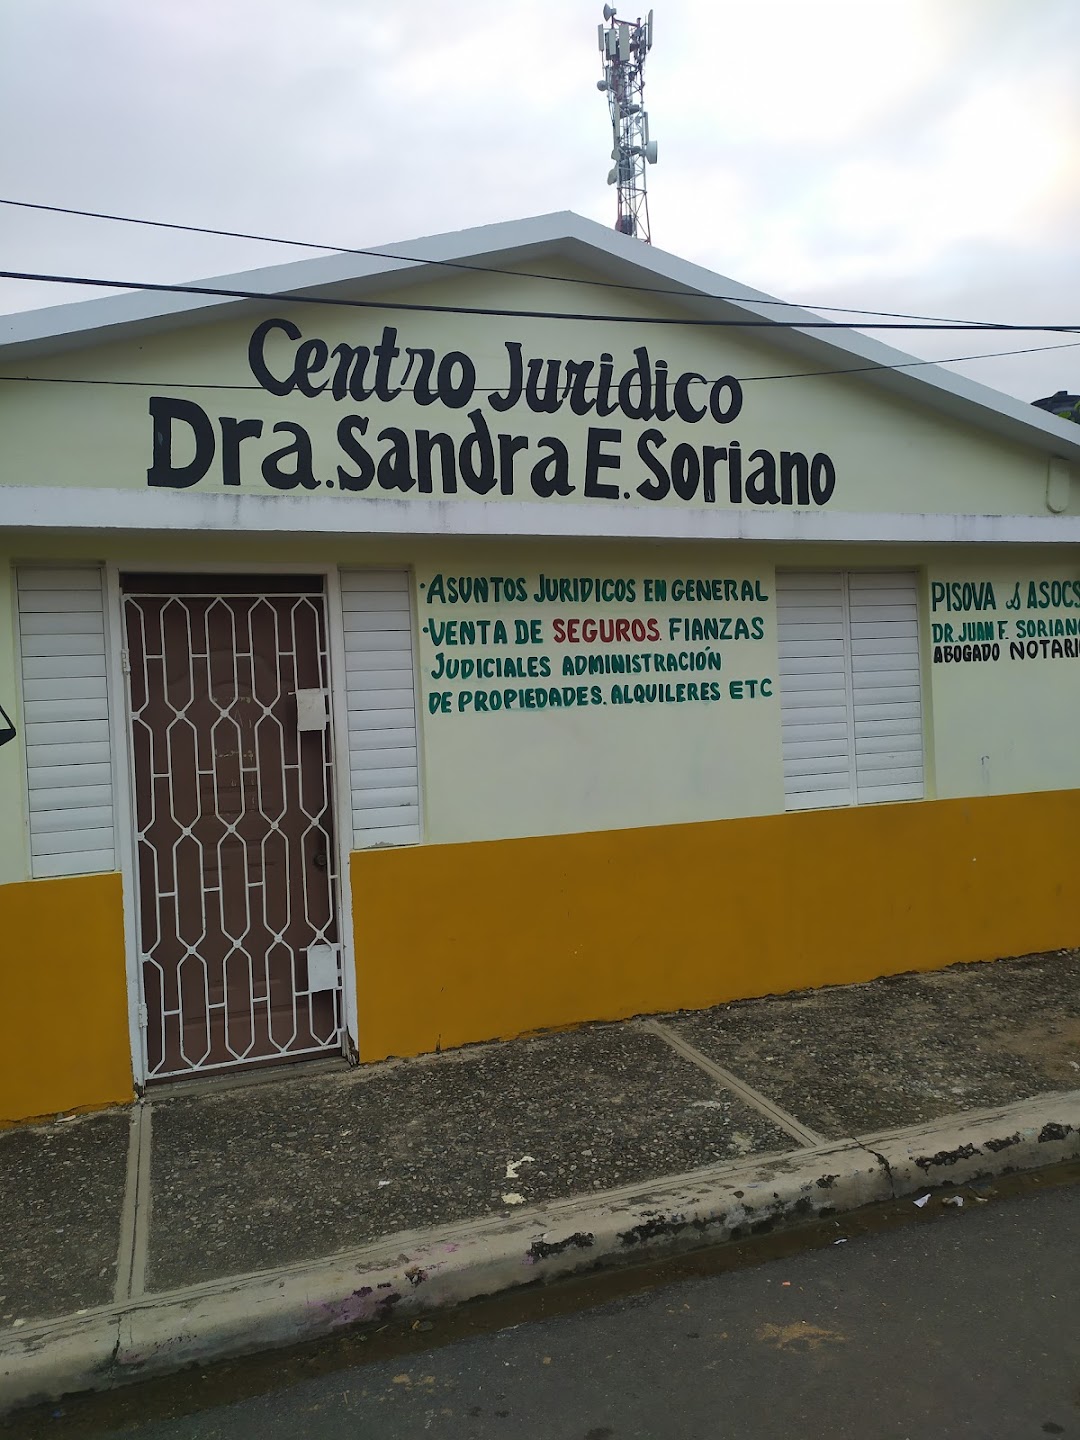 Centro Juridico dra. Sandra E. Soriano